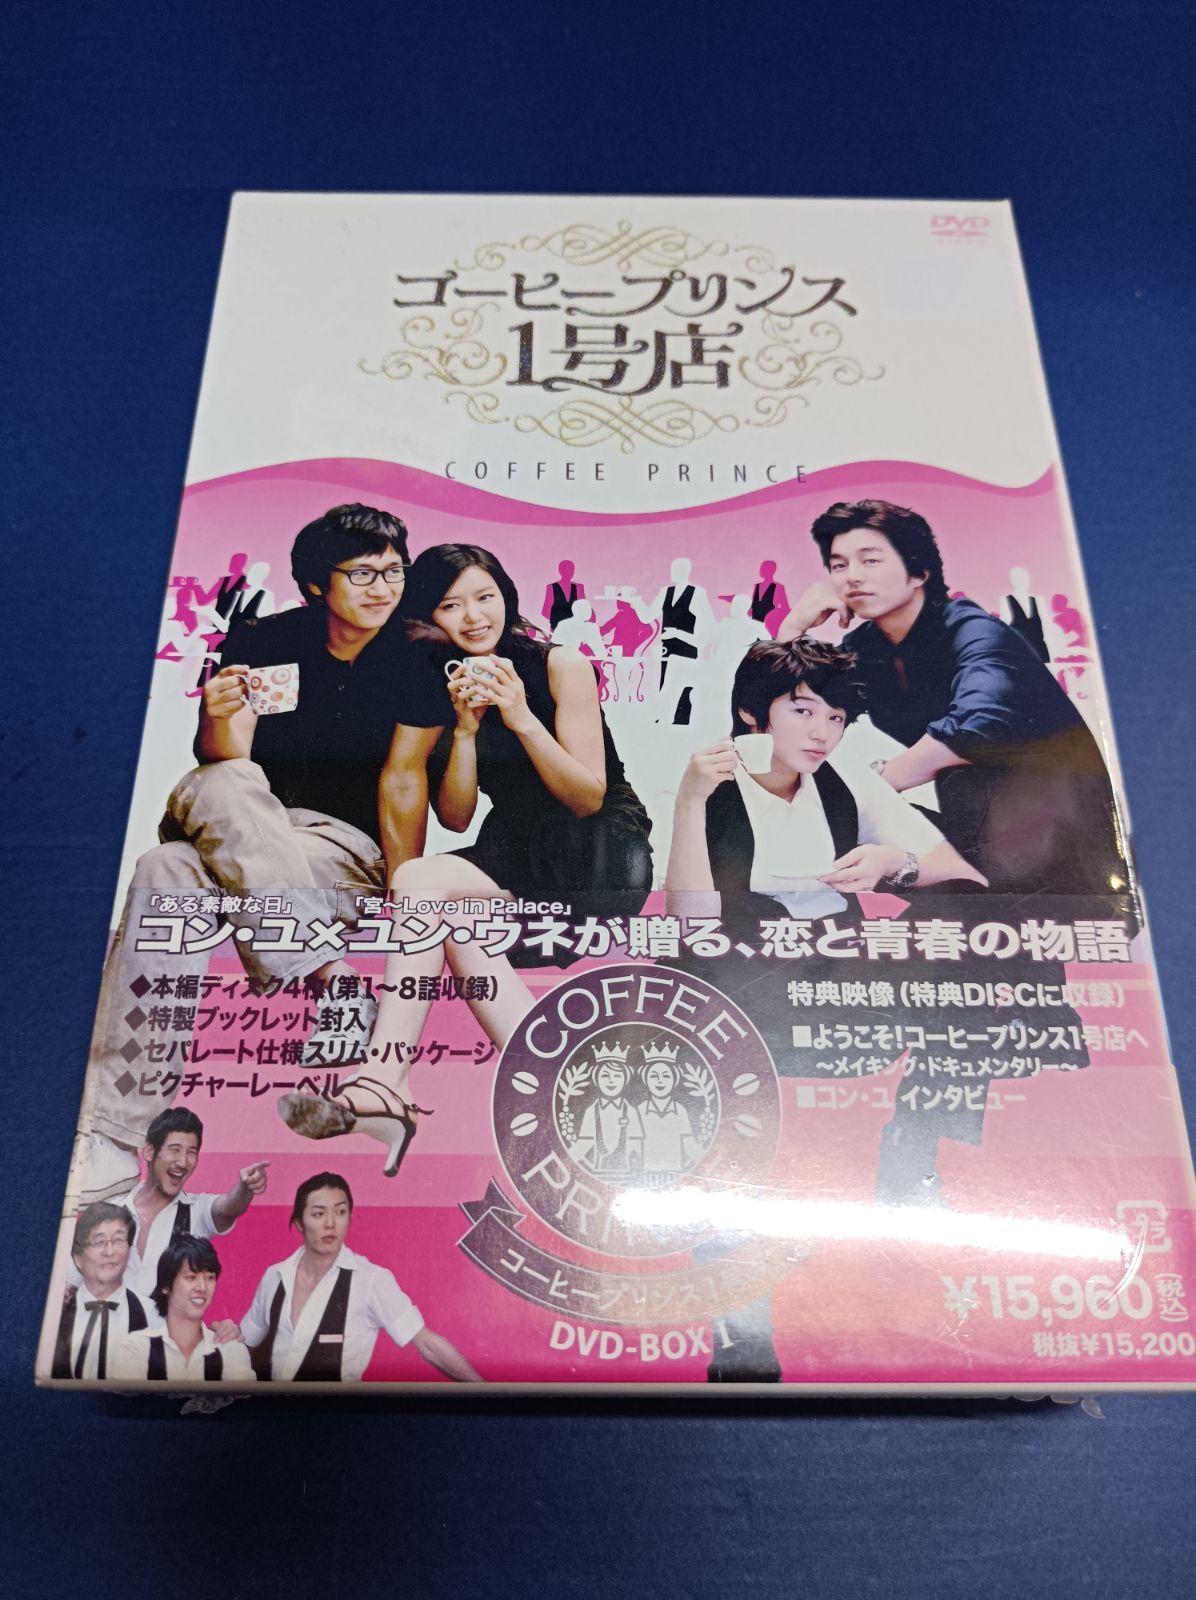 A04 コーヒープリンス1号店 DVD BOX - メルカリ